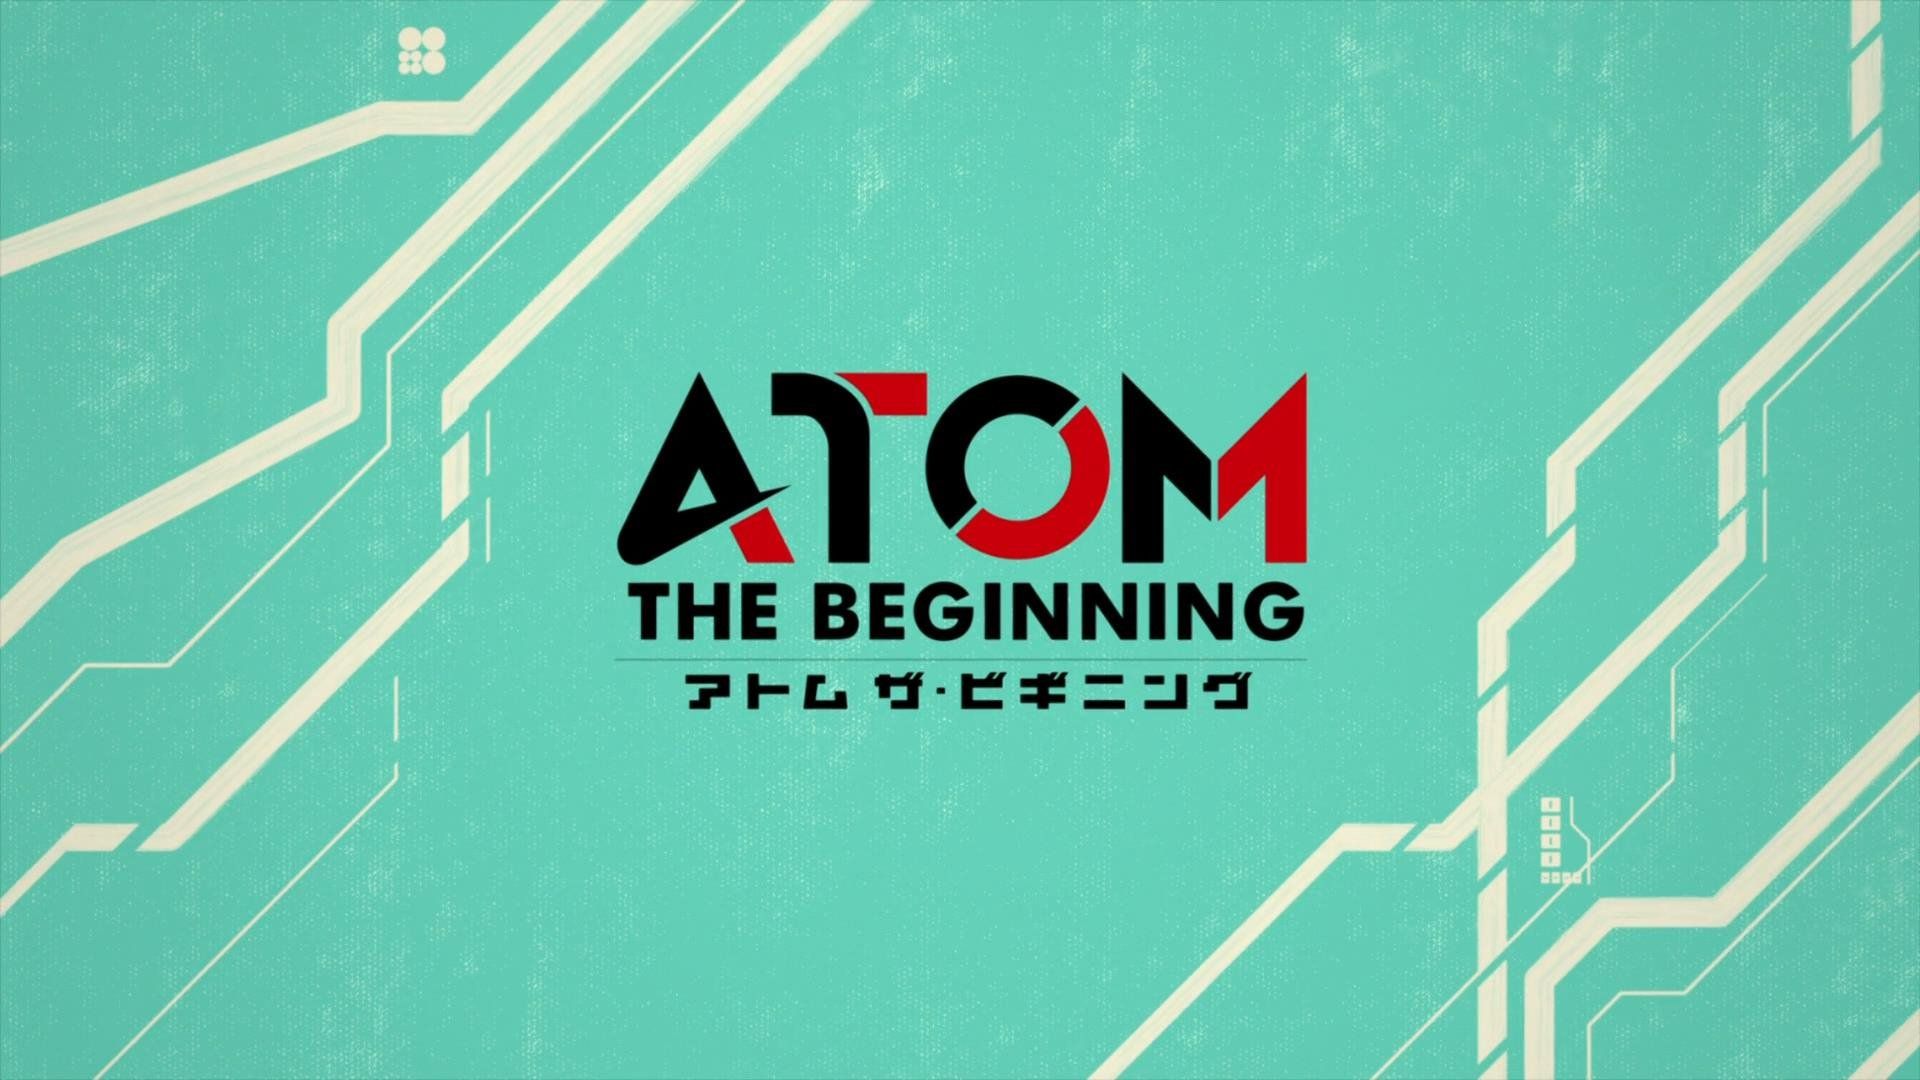 Atom: The Beginning Backdrop